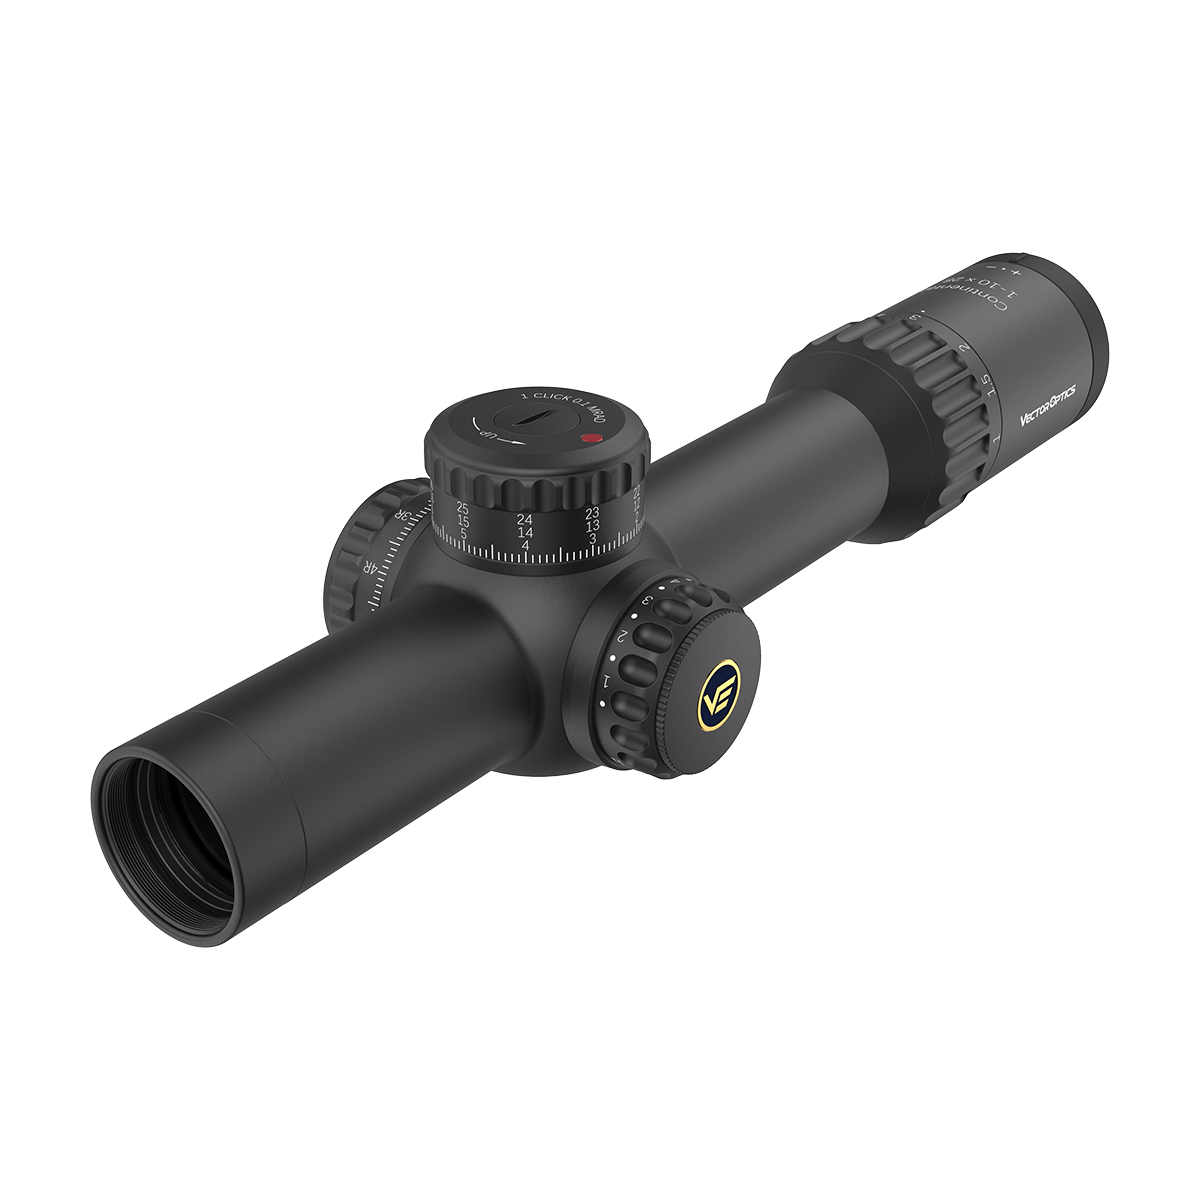 Continental x10 1-10x28  ED FFP Riflescope VET-RAR